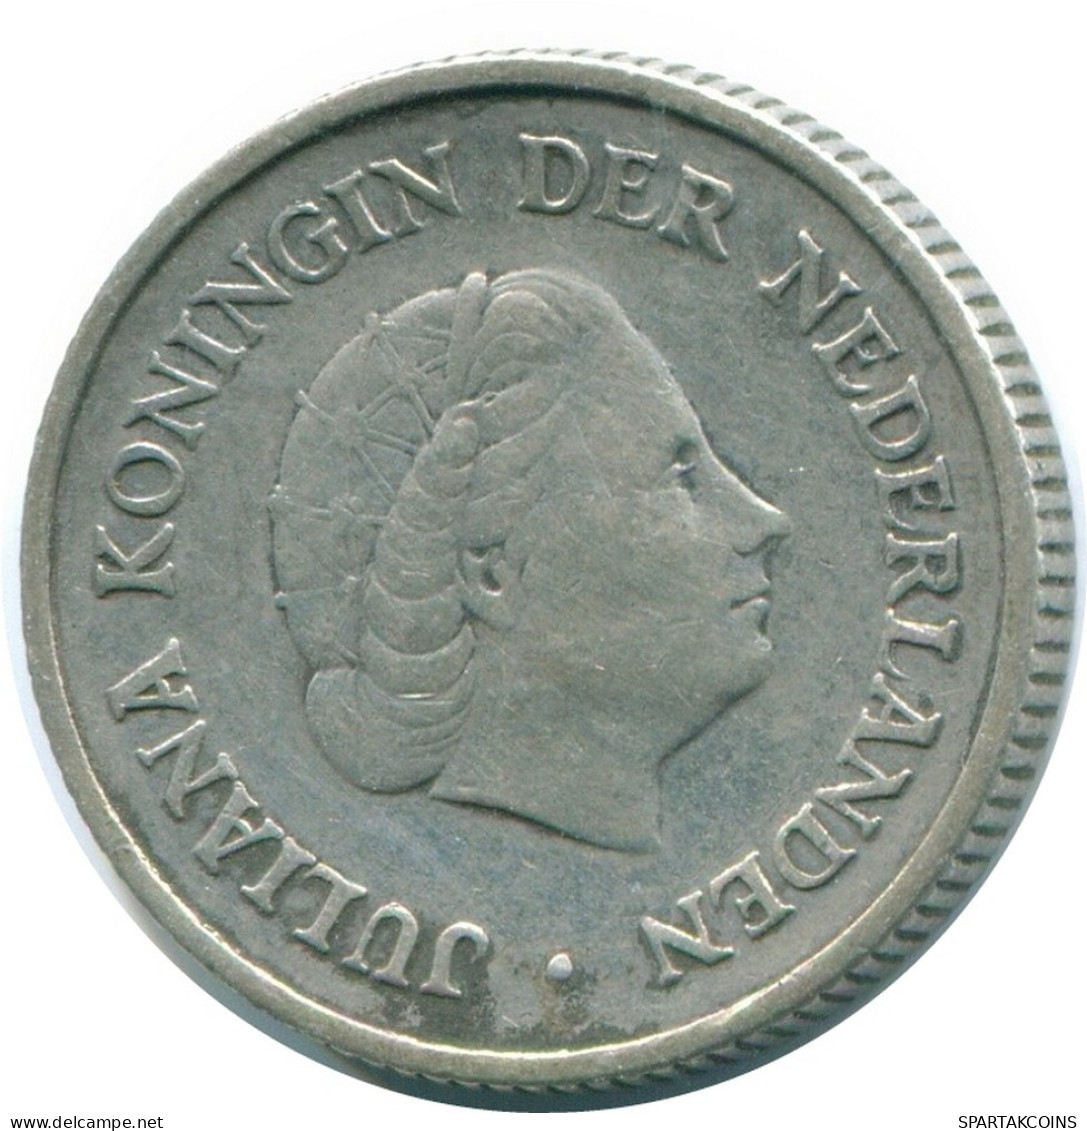 1/4 GULDEN 1954 NETHERLANDS ANTILLES SILVER Colonial Coin #NL10868.4.U.A - Antilles Néerlandaises